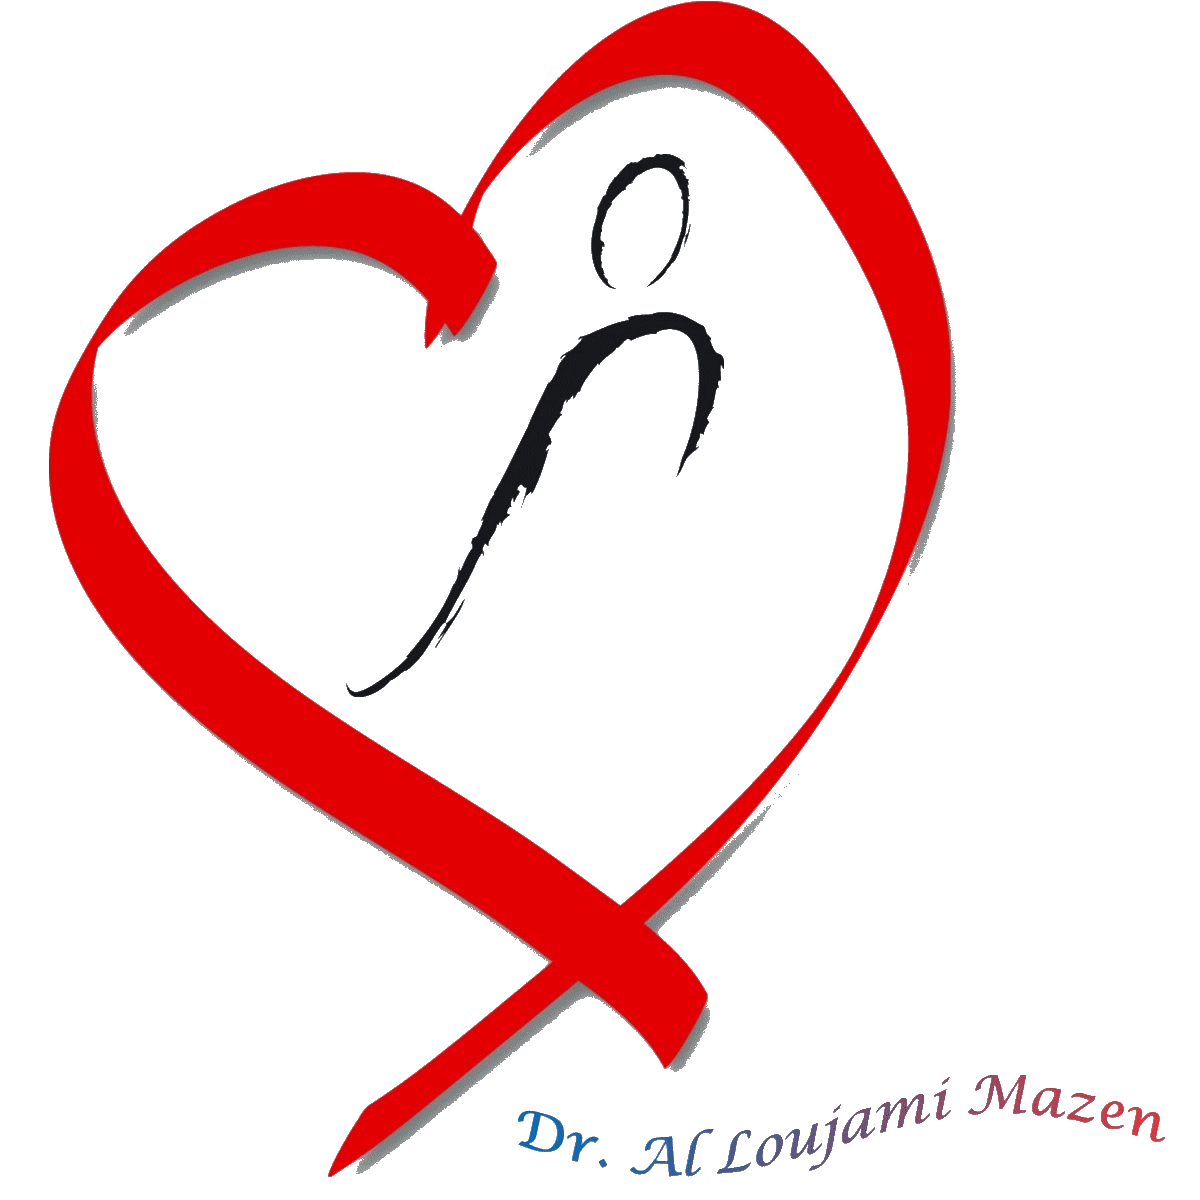 Dr. Al Loujami Mazen Logo